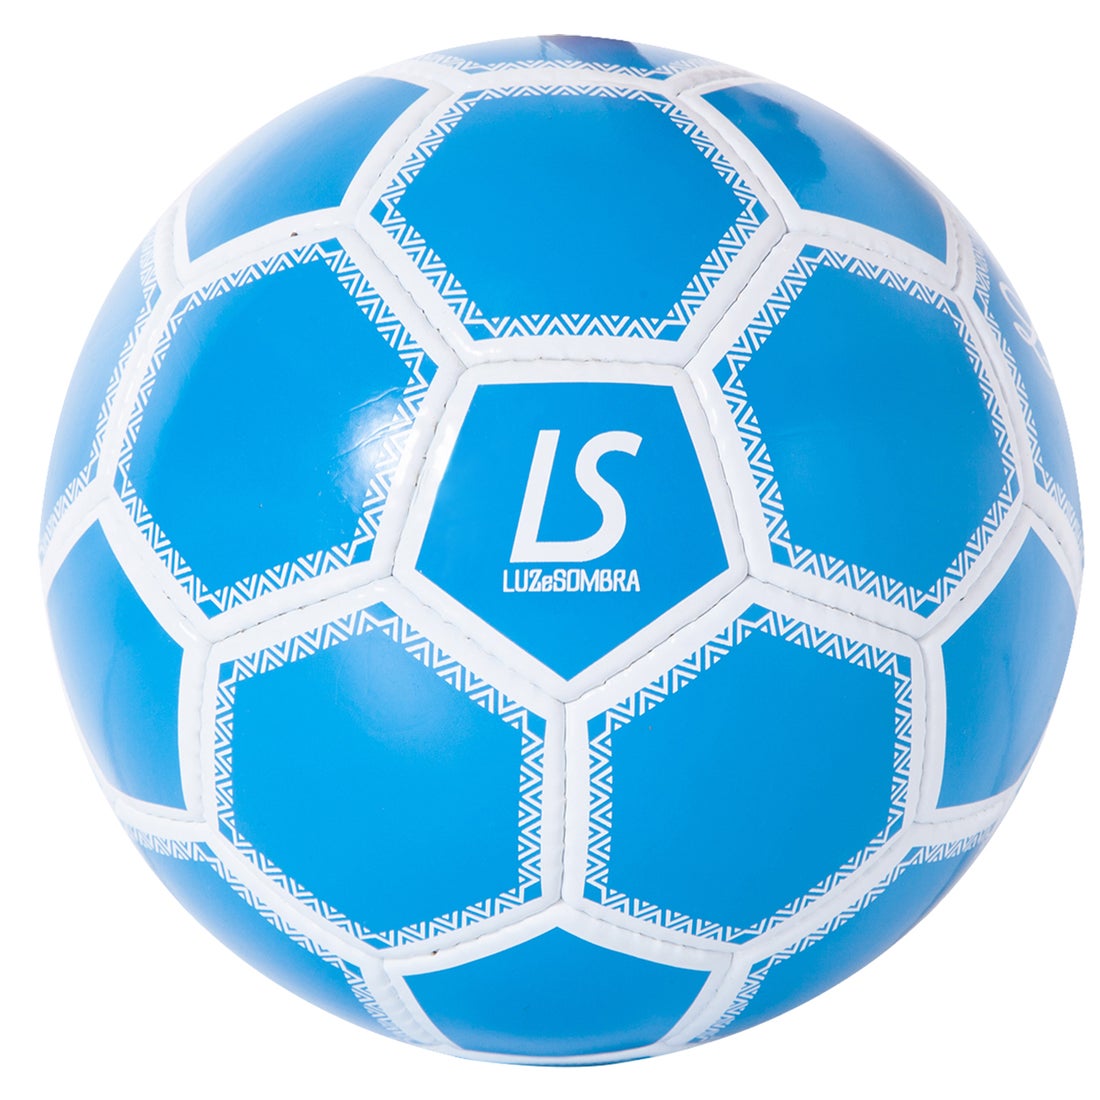 LUZ e SOMBRA フットサルボール 4号球(ブルー) F2014918 ATMBLU